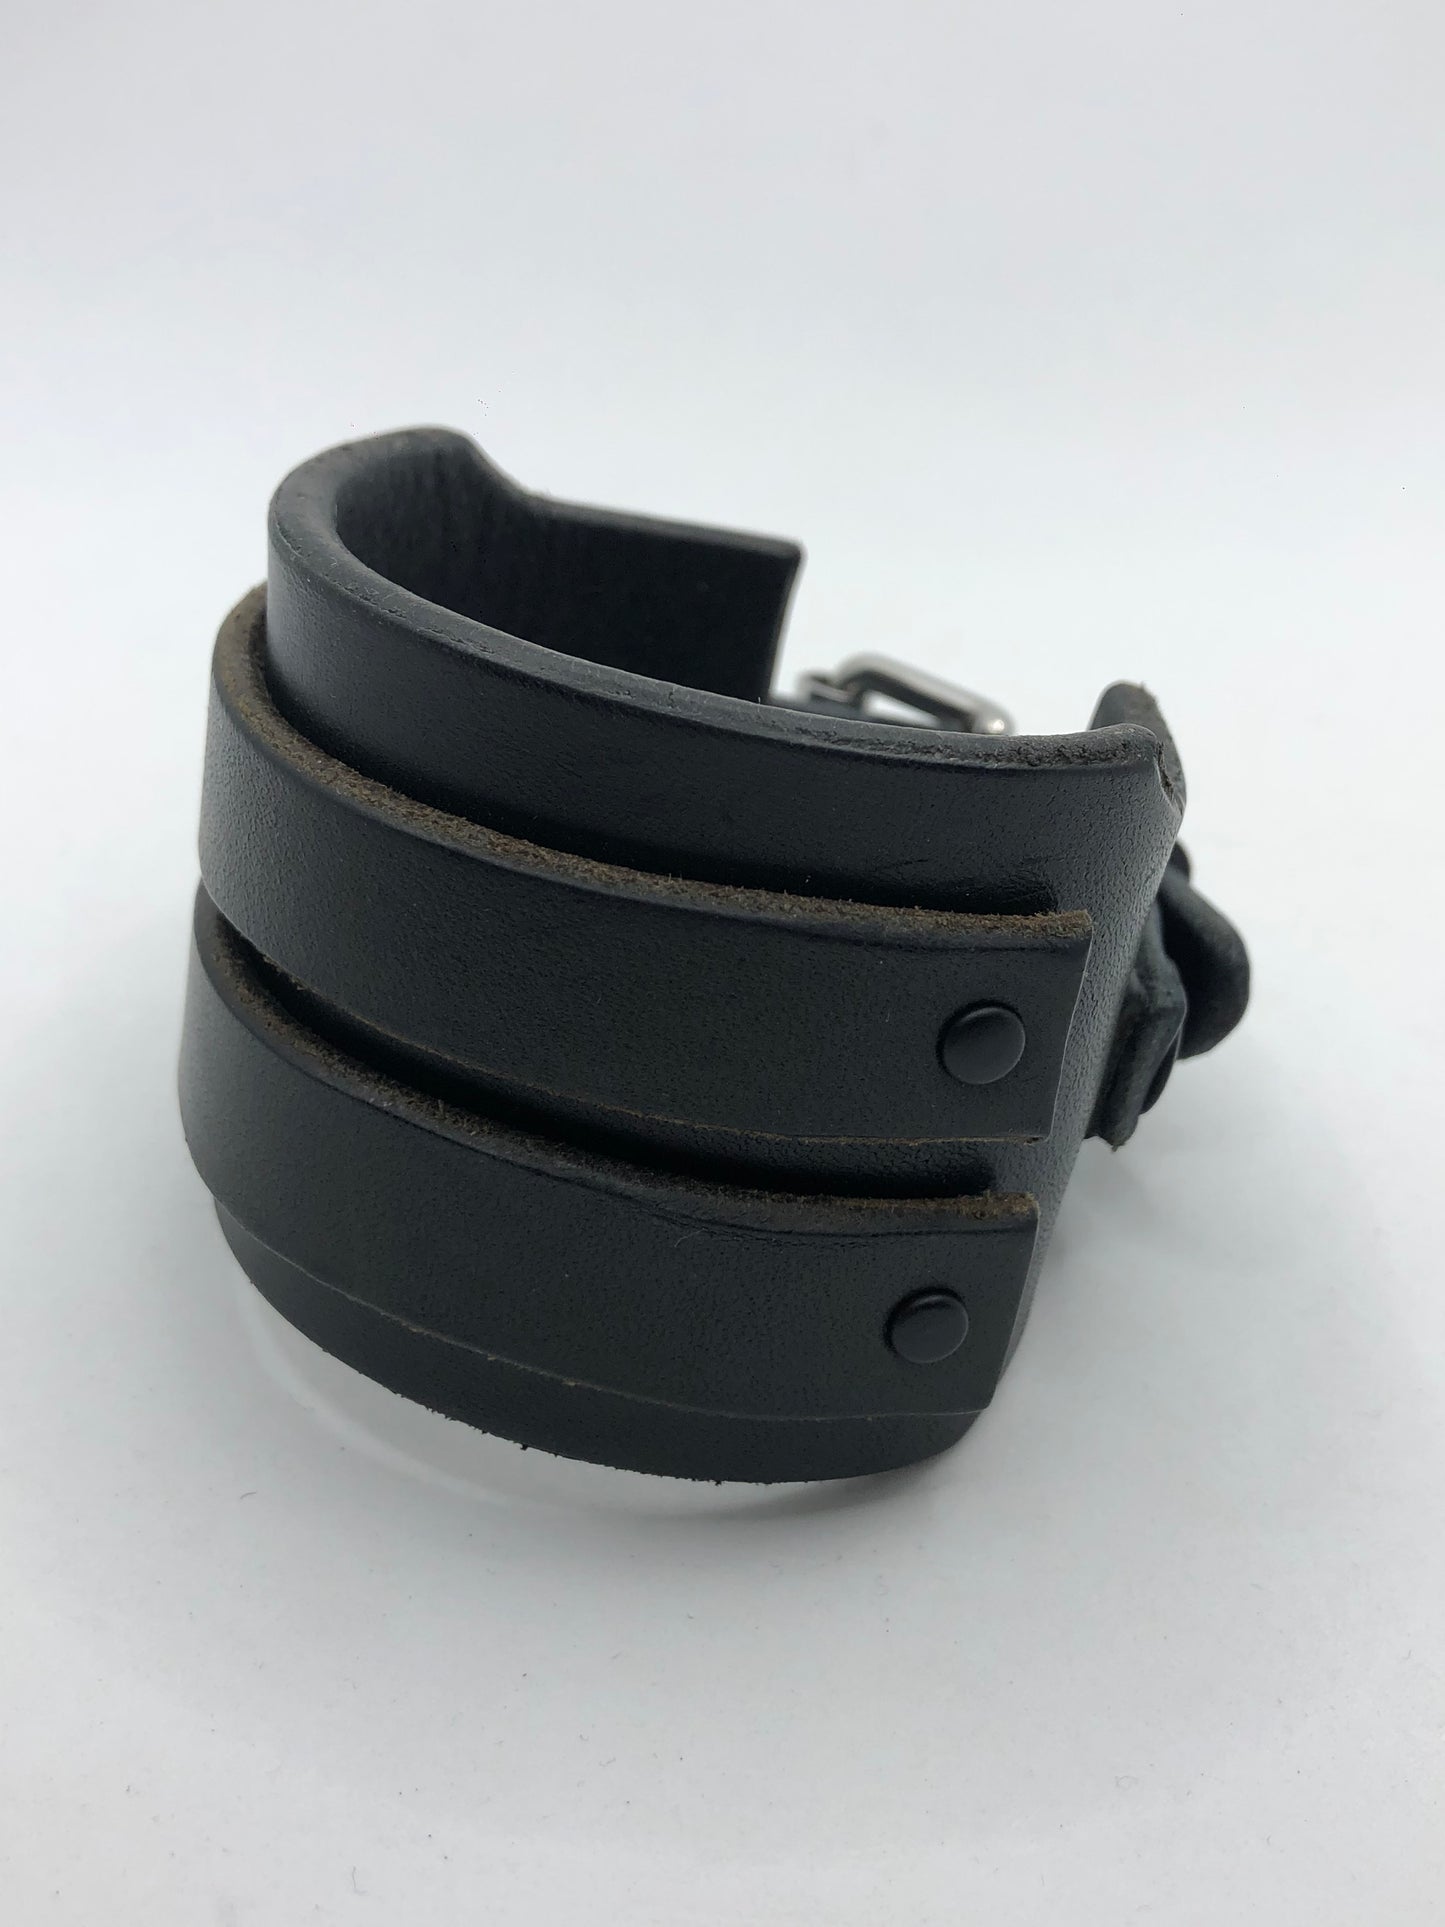 Cypher - Cyberpunk Style Leather Wristband / Bracelet